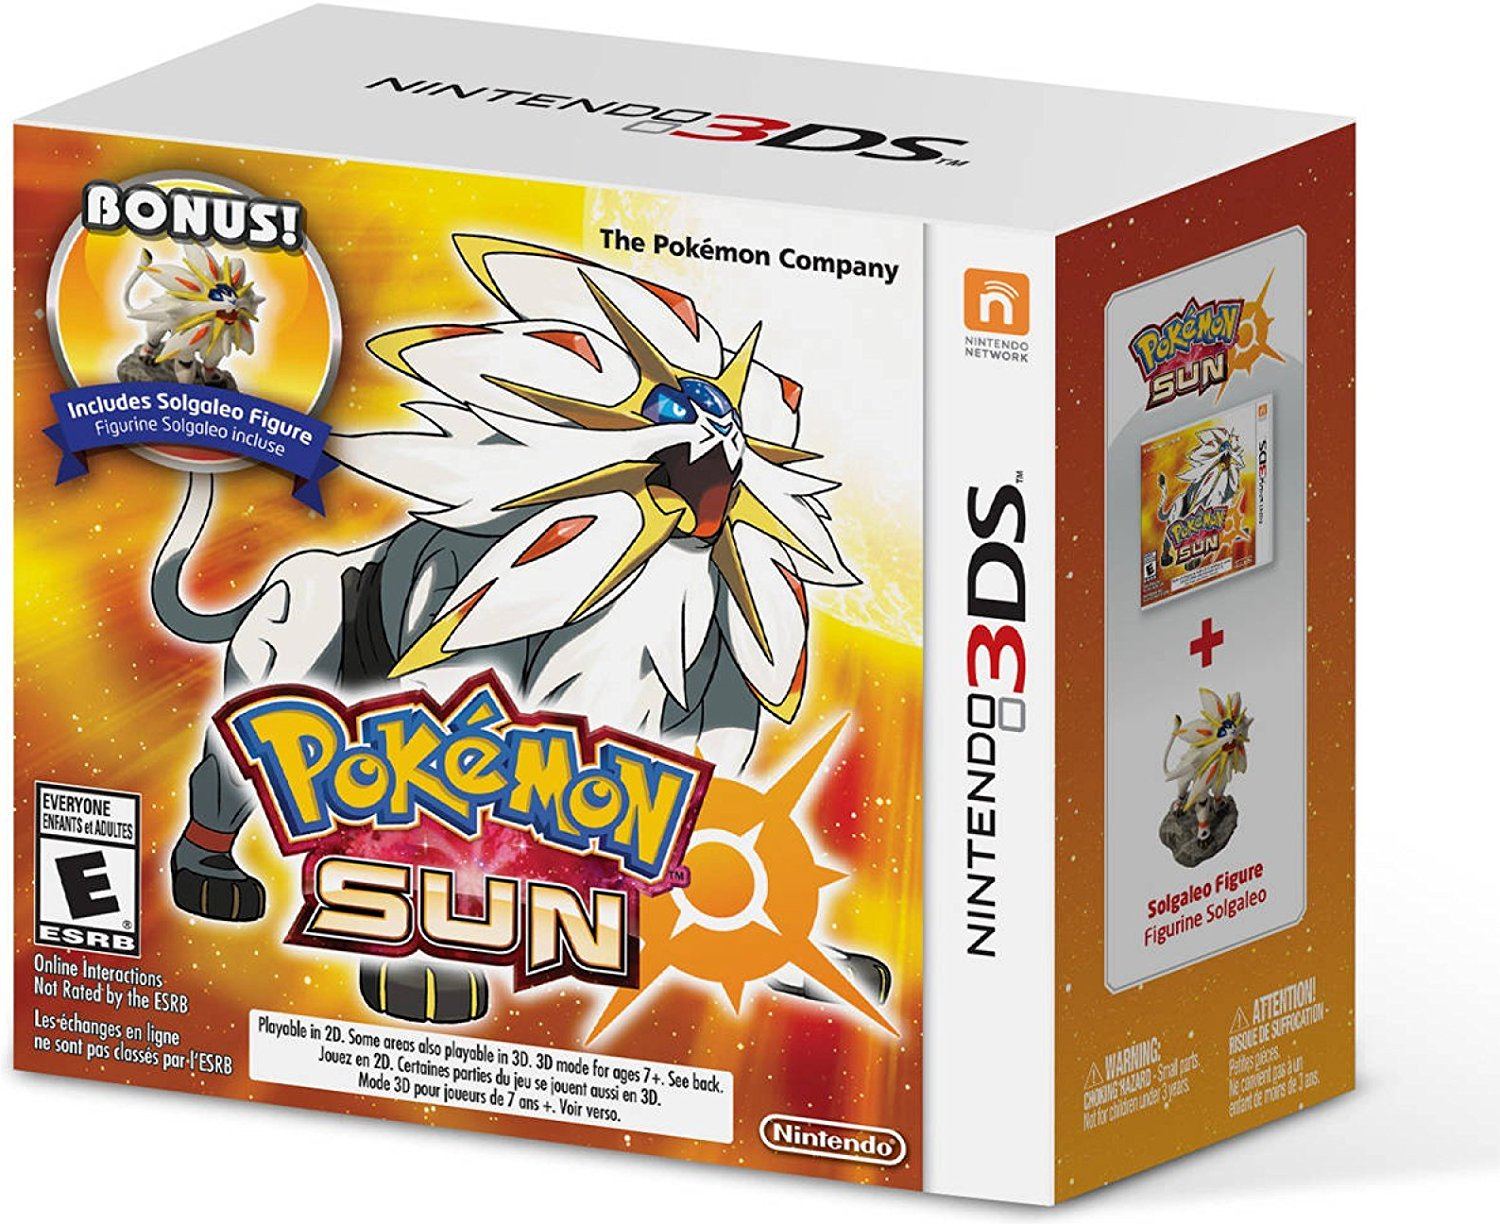 Pokemon Sun with bonus Solgaleo Figure for Nintendo 3DS